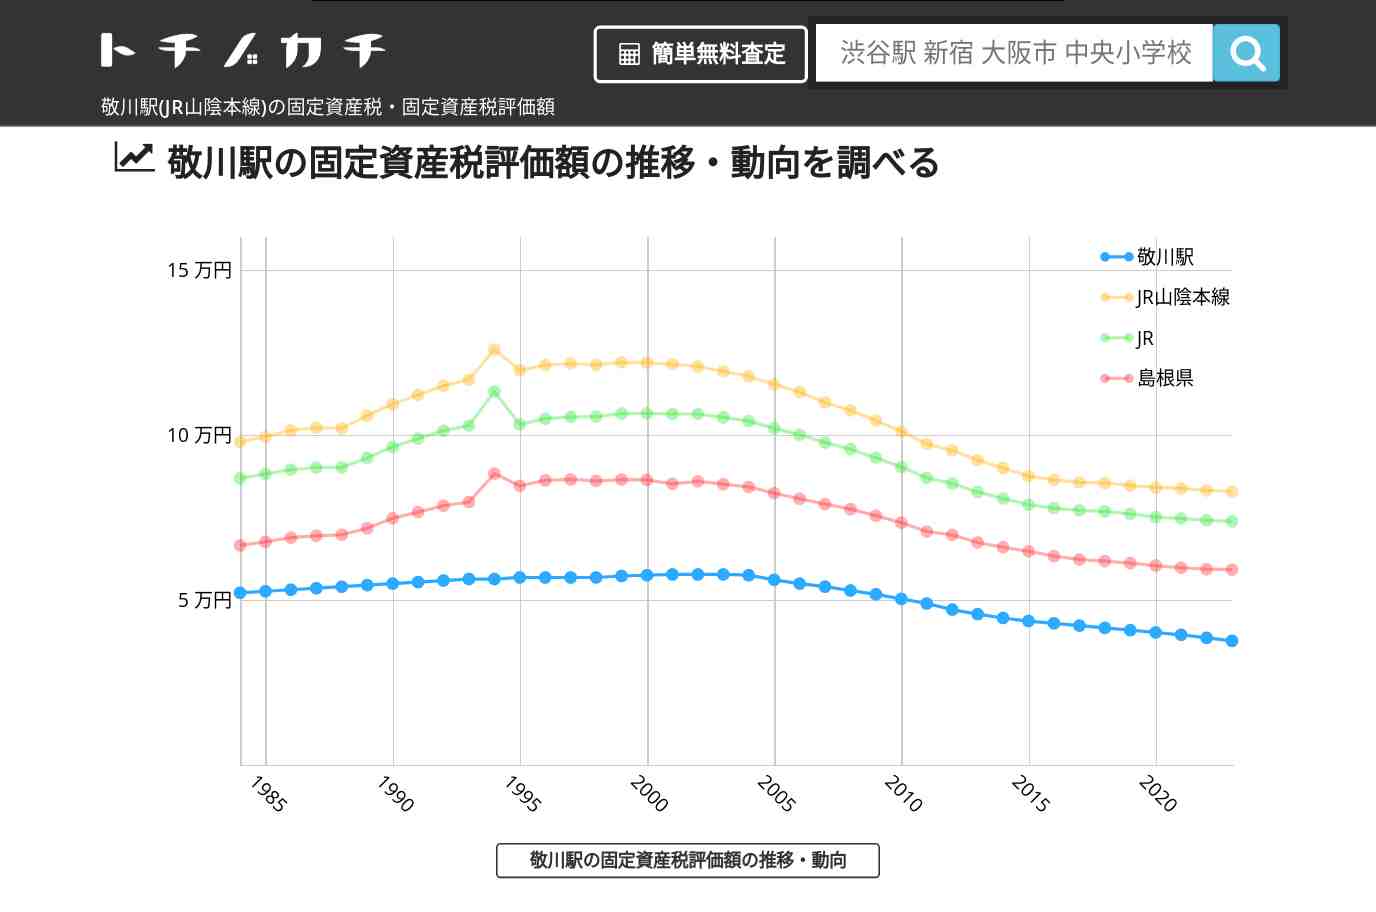 敬川駅(JR山陰本線)の固定資産税・固定資産税評価額 | トチノカチ